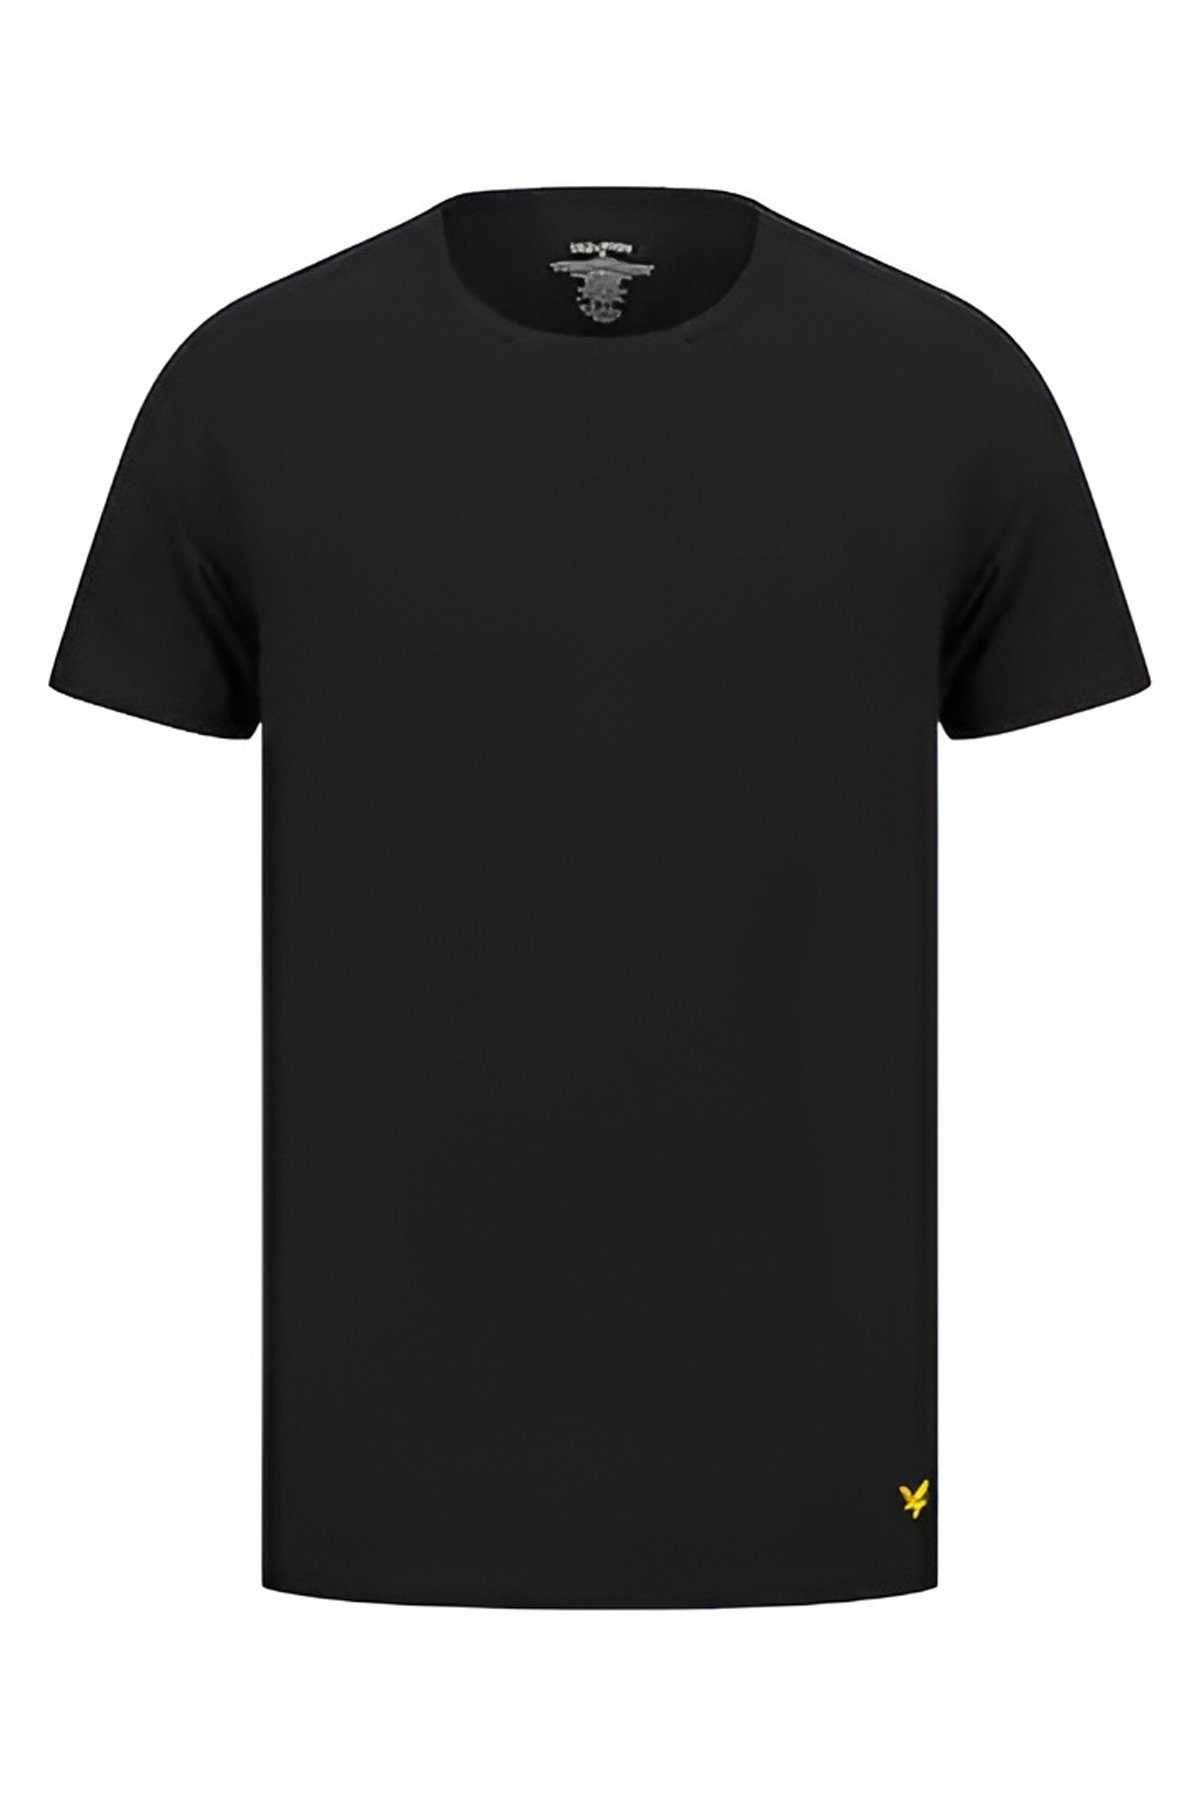 T-Shirt Basic (3Er-Set) Farben Lyle & Scott